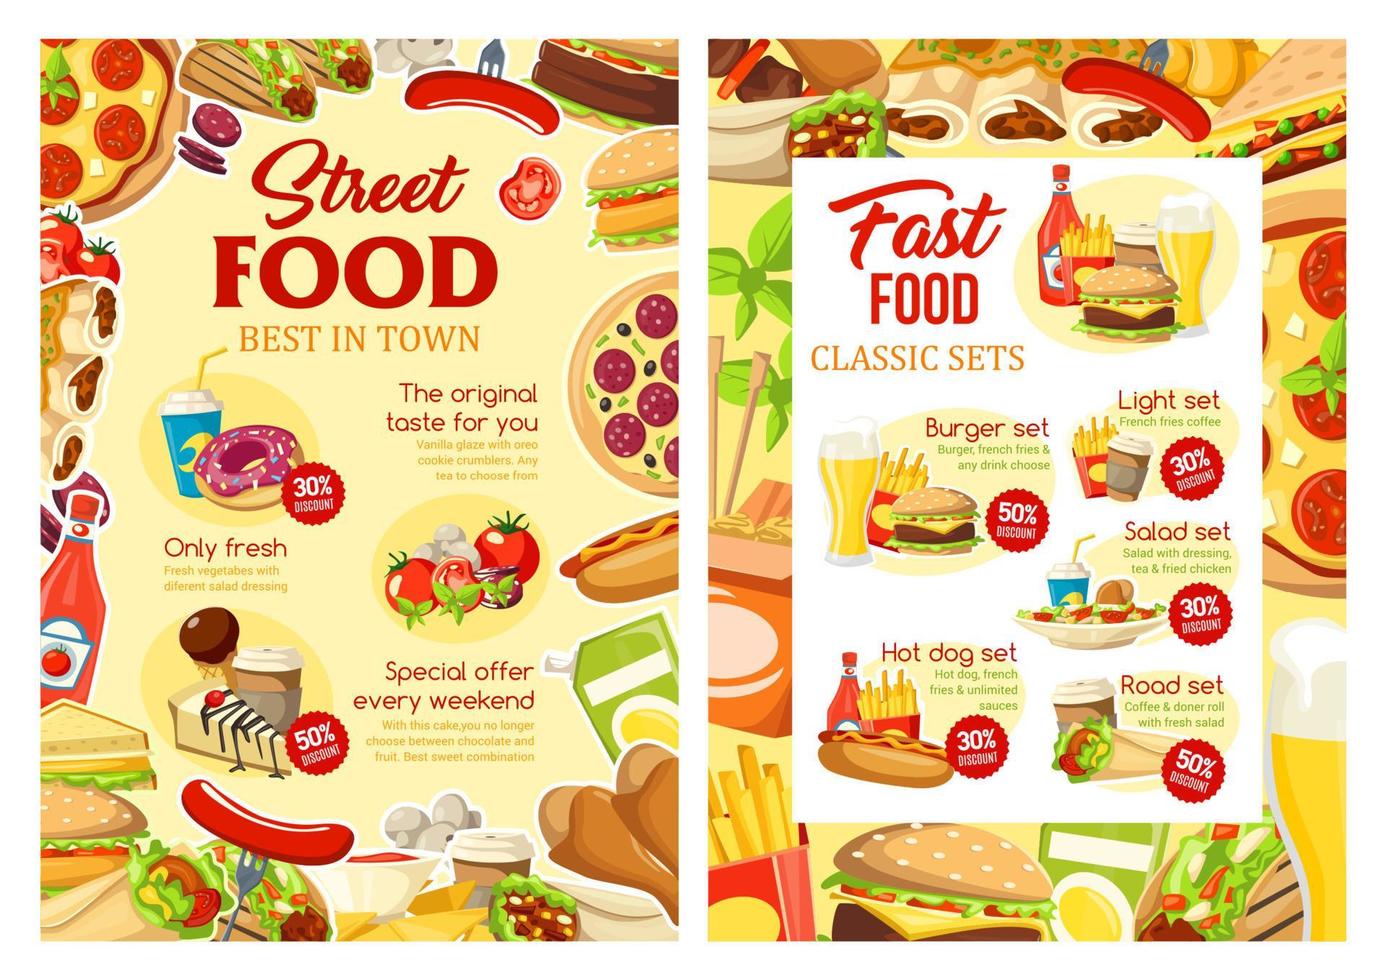 Fast food and street food meals menu vector